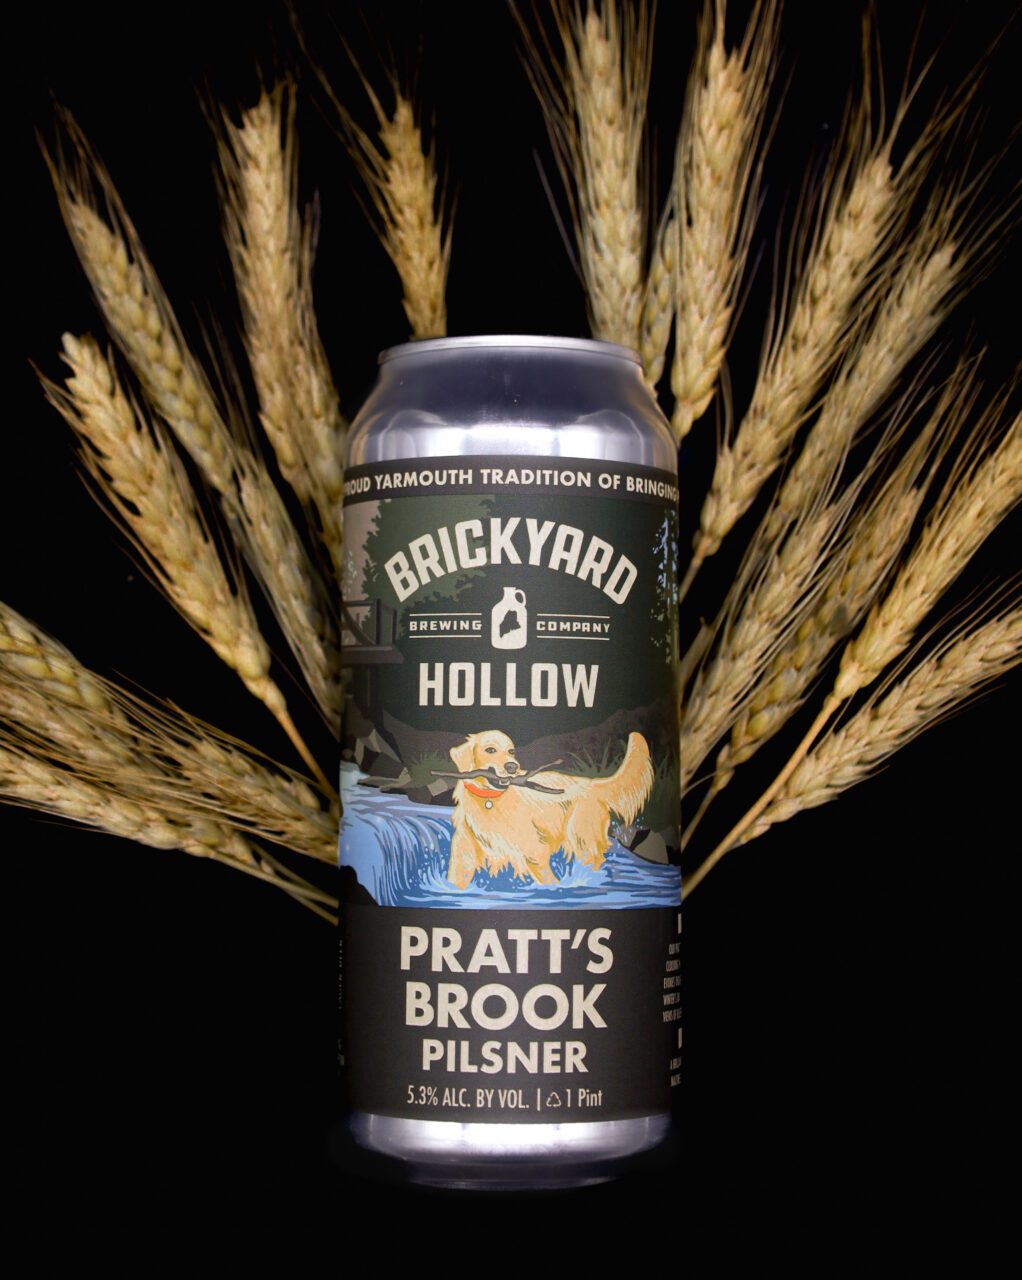 Can of Pratt's Brook Pilsner craft beer from Brickyard hollow in Maine